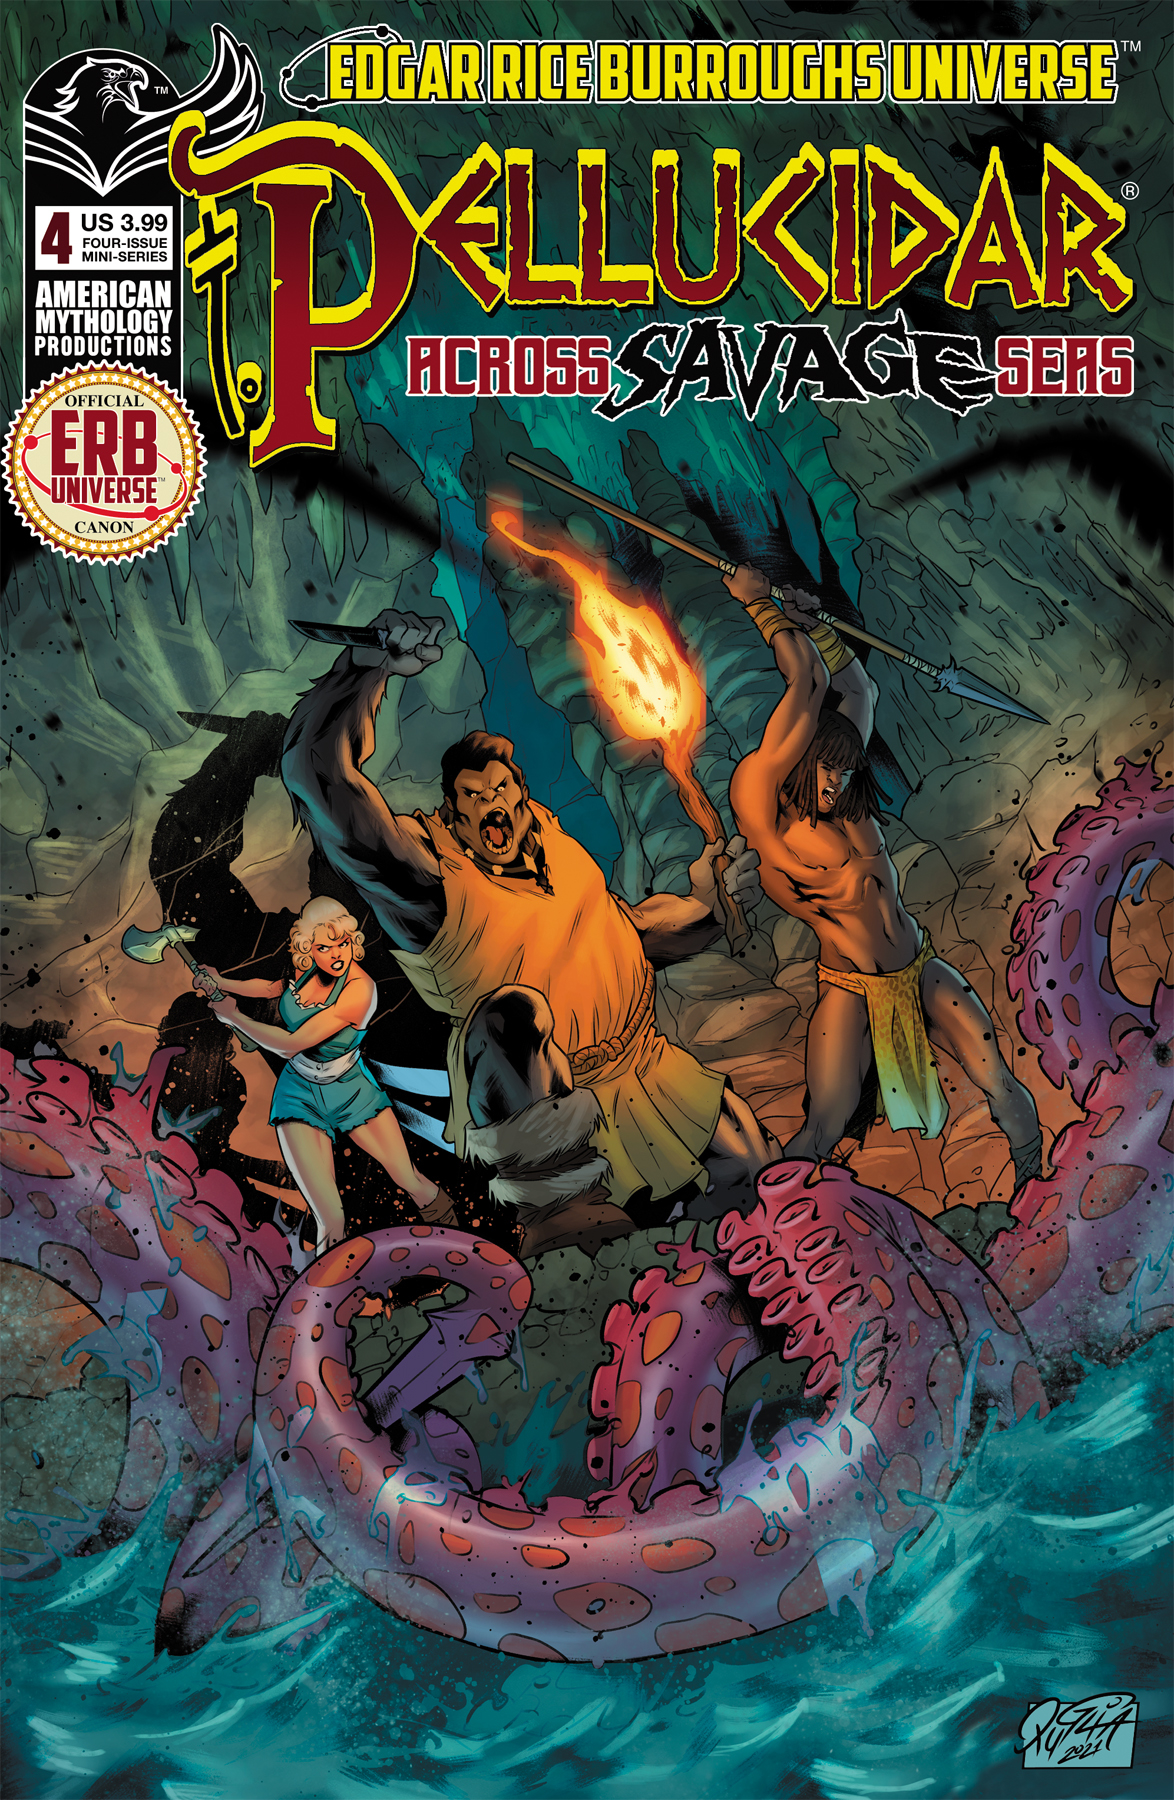 Pellucidar Across Savage Seas #4 Cover A Main (Of 4)